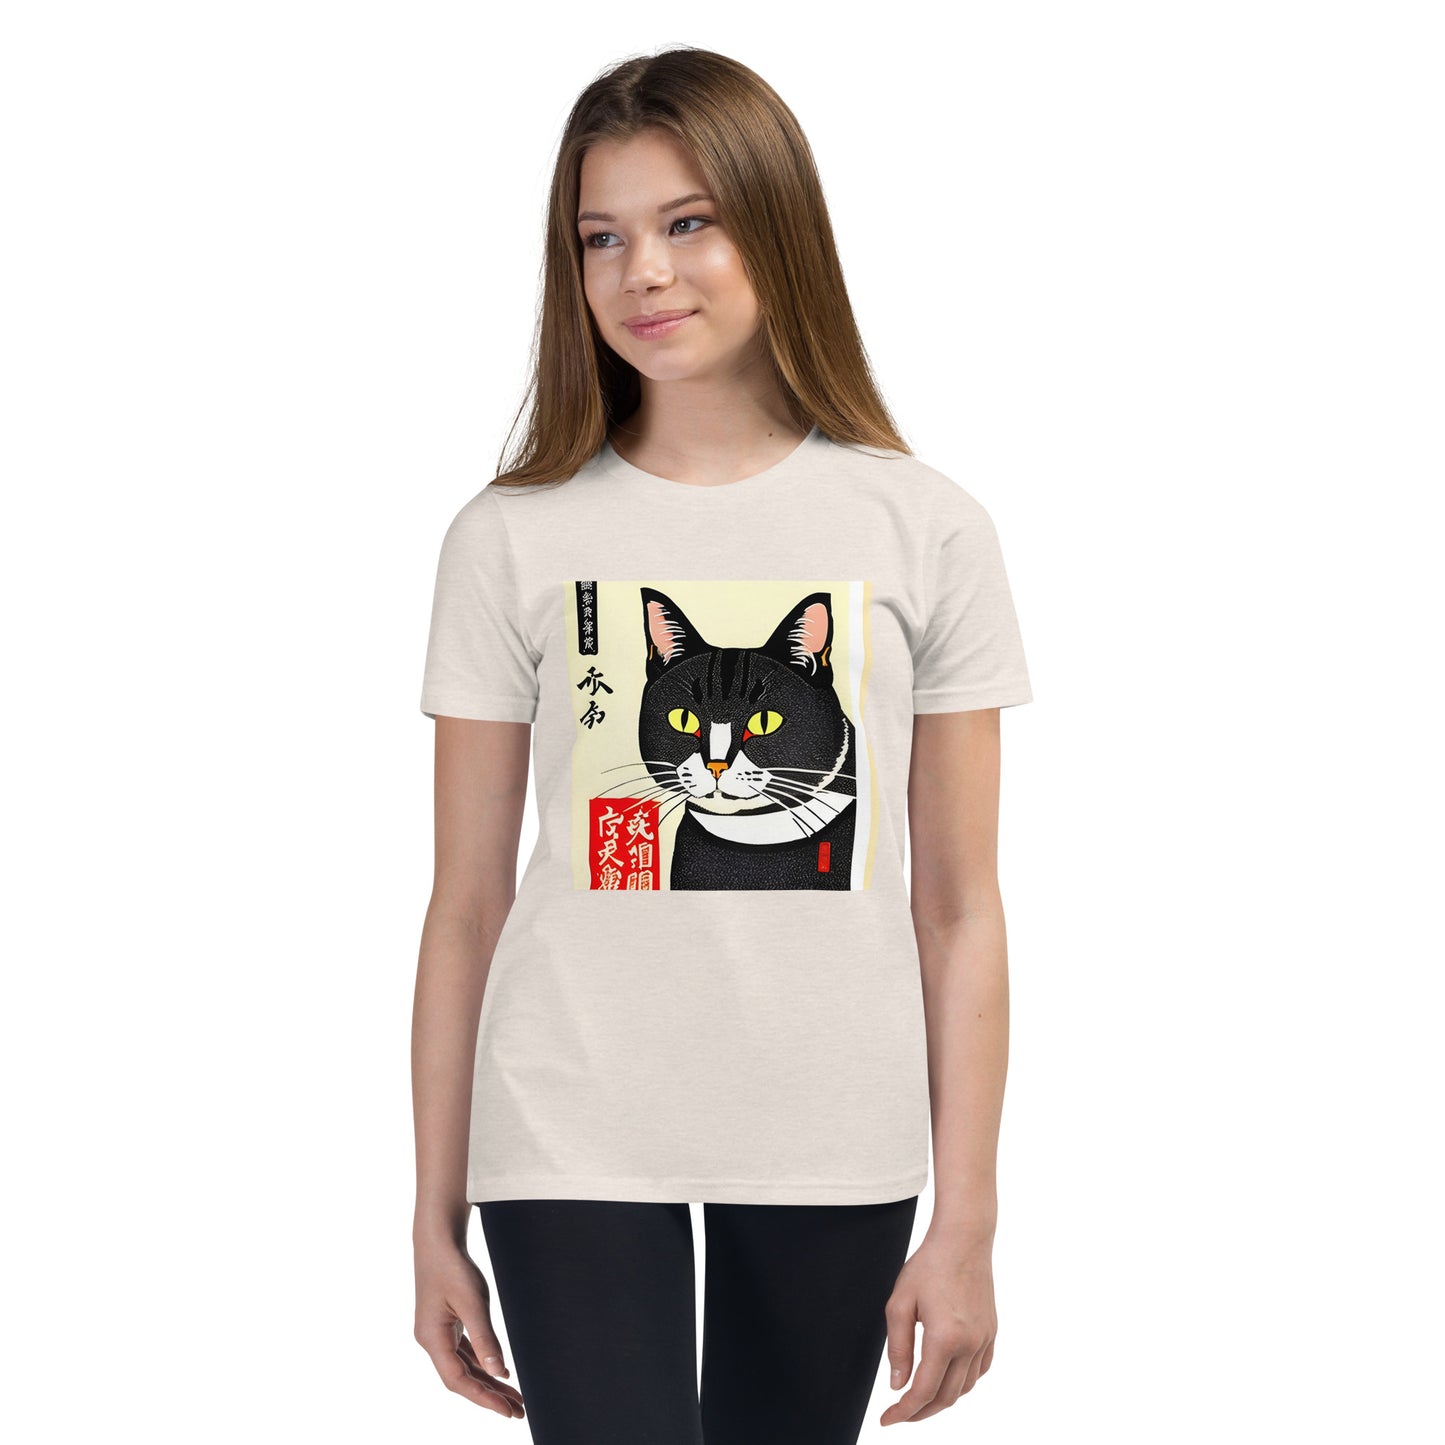 Meowsome Kid's T-Shirt - 024